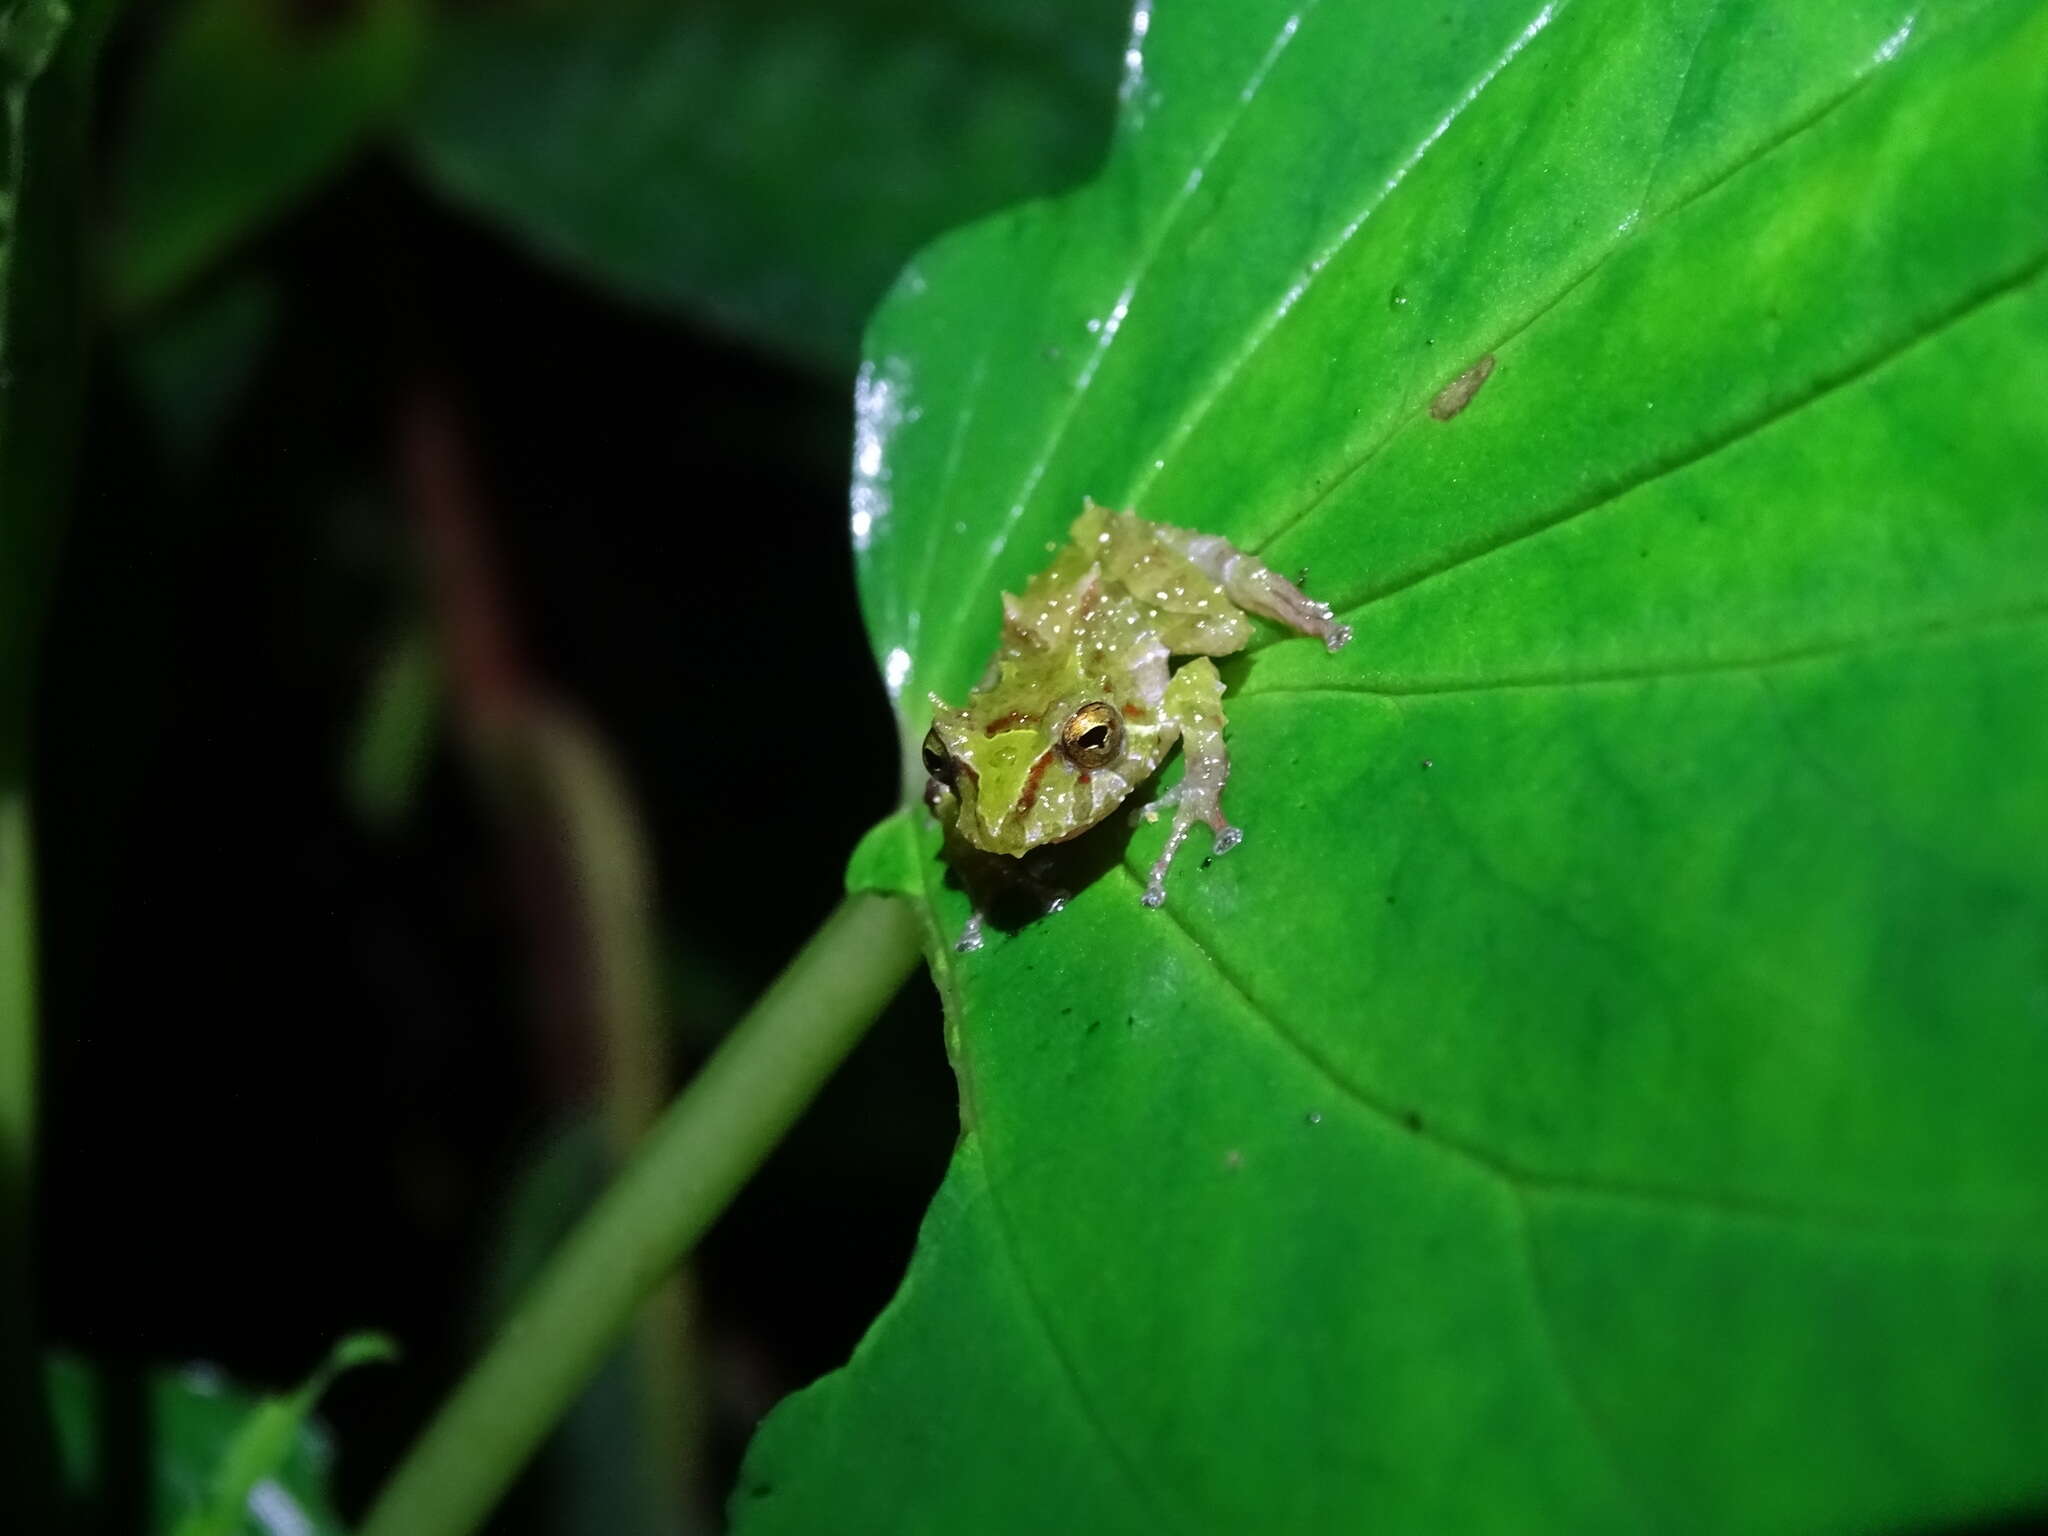 Image of Llanganates Rain Frog; Cutin de los Llanganates